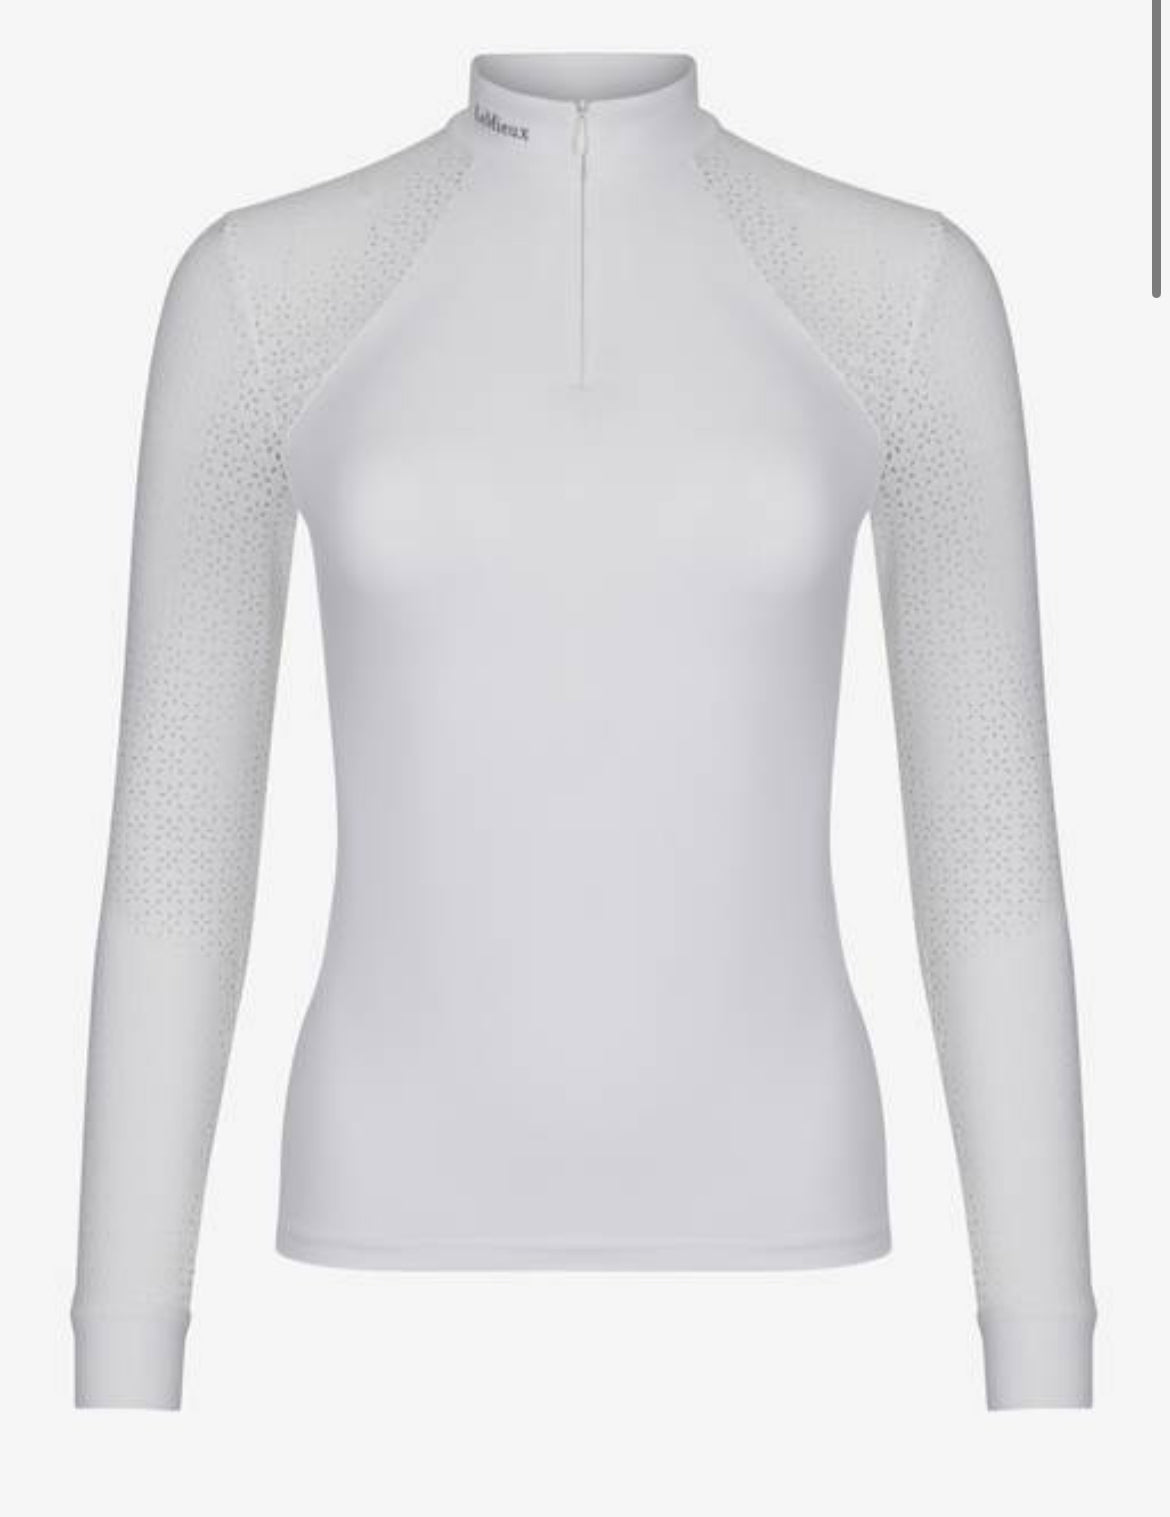 Le Mieux Olivia Long Sleeve Show Shirt White